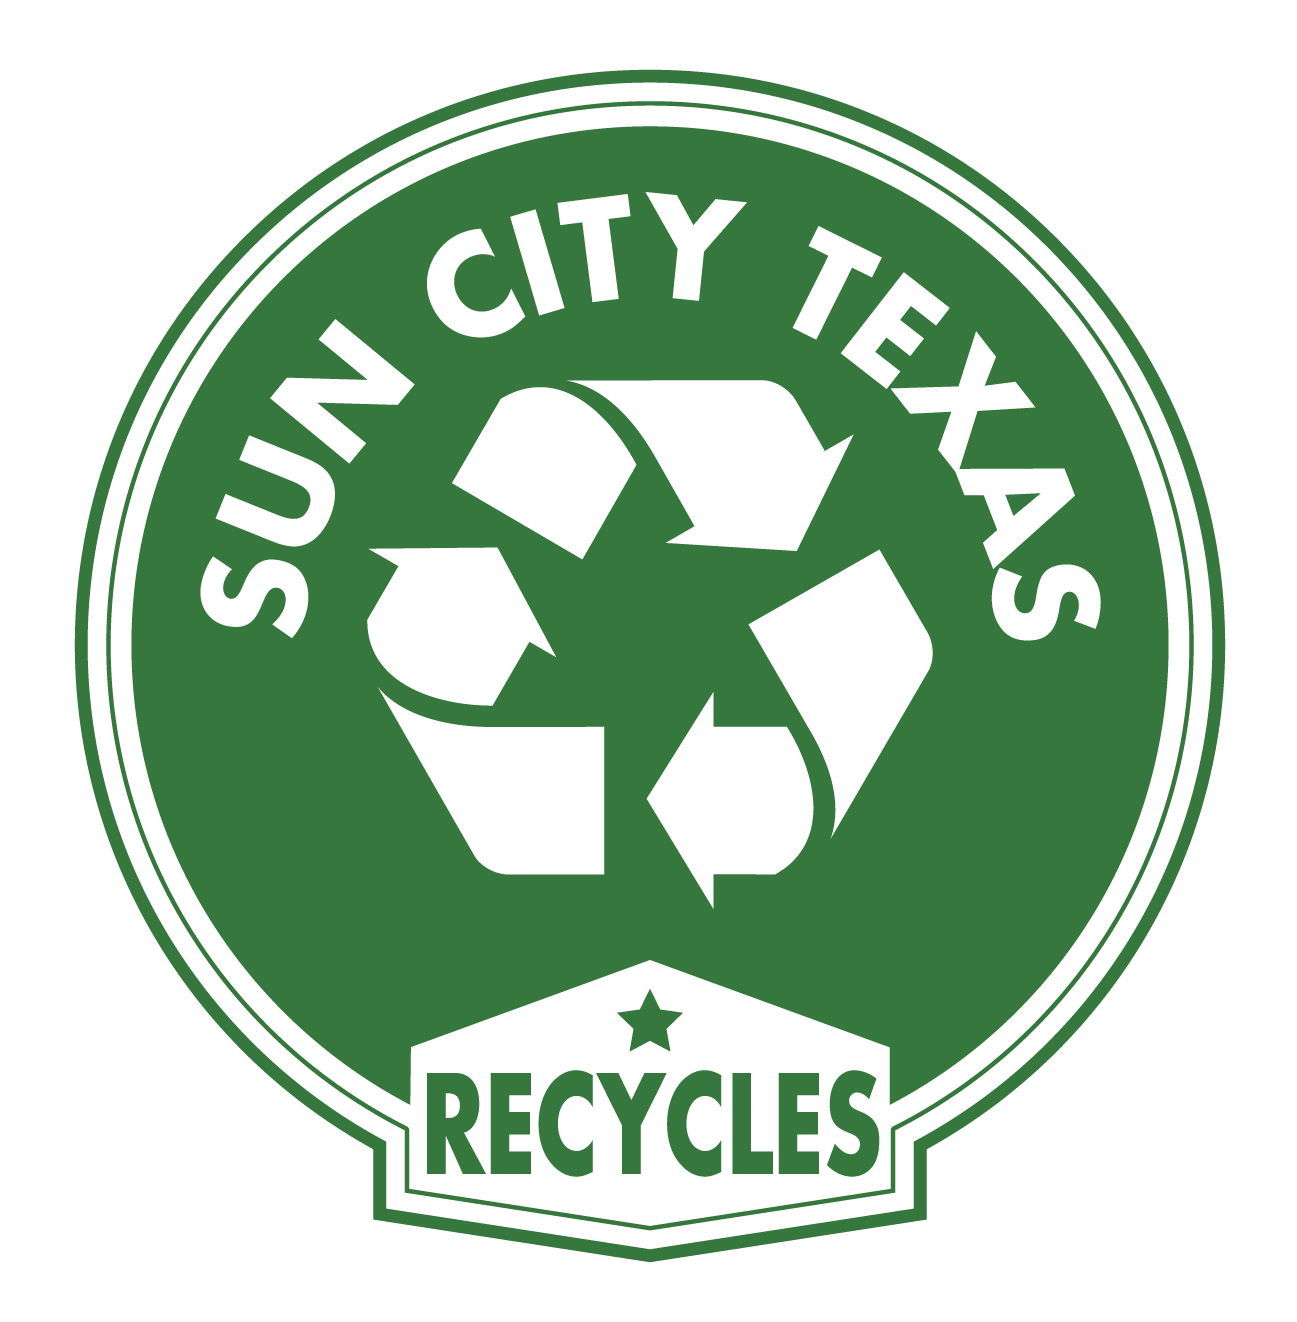 Sun City Recycles logo